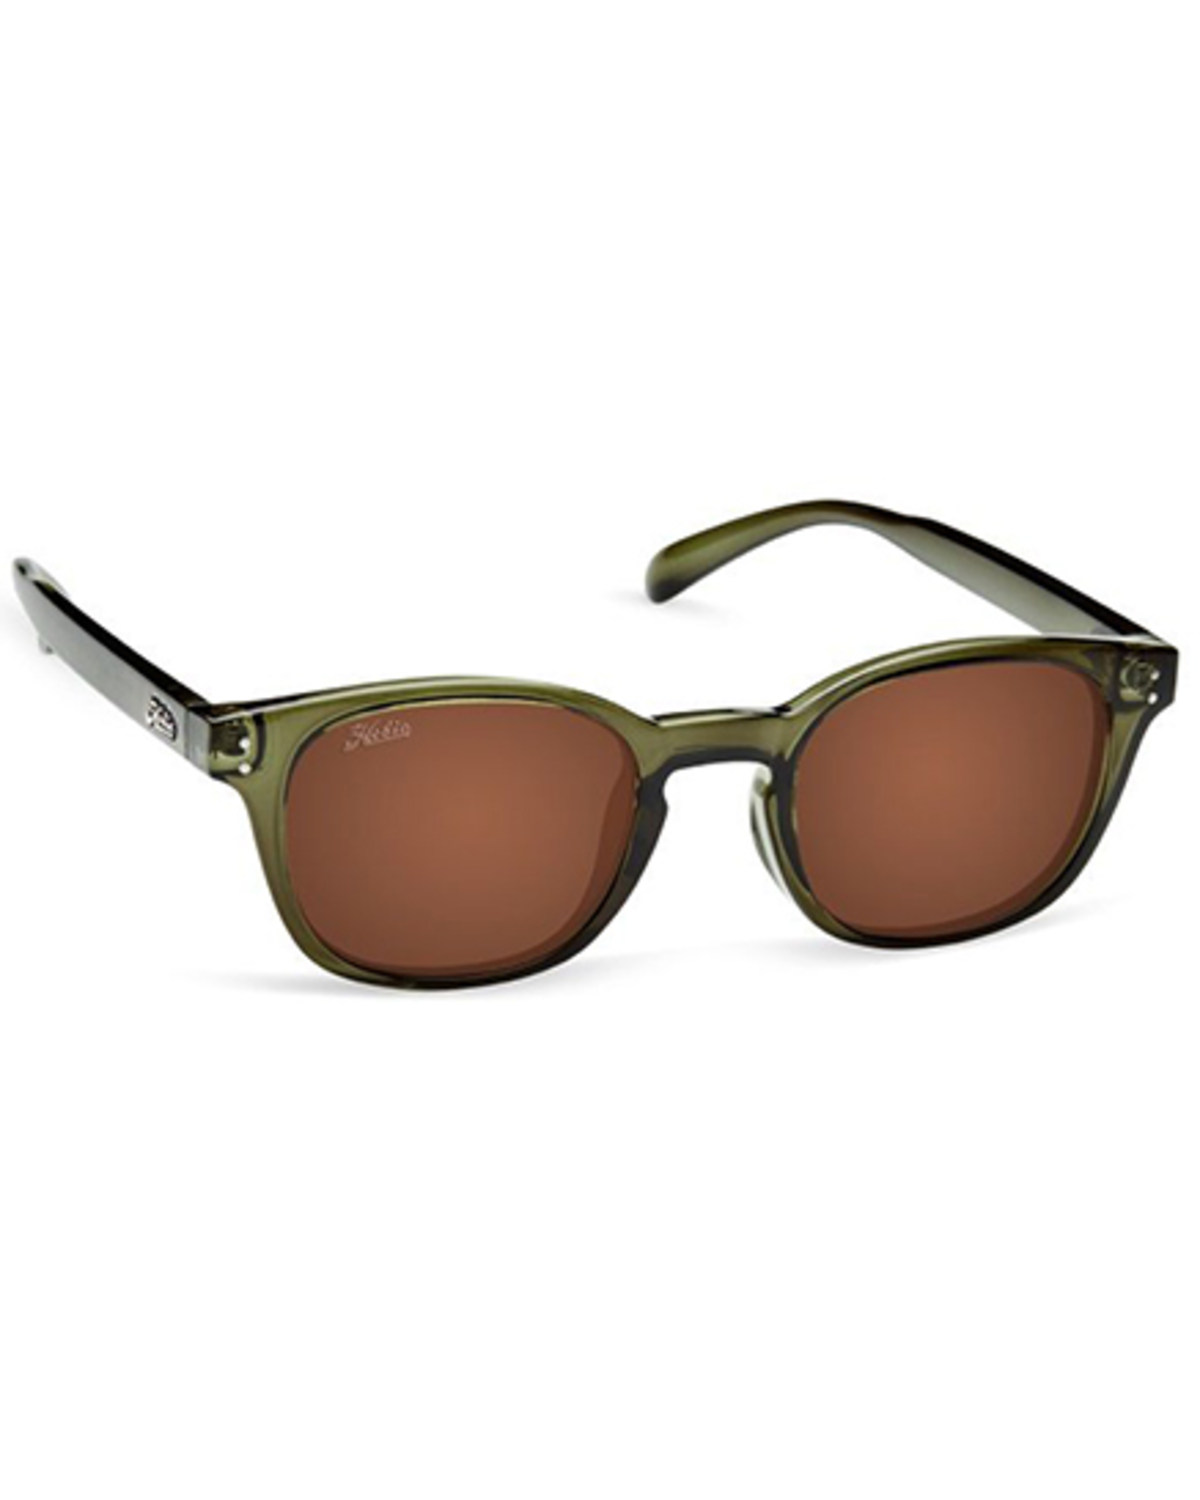 Hobie Wrights Shiny Crystal Olive & Copper Polarized Sunglasses